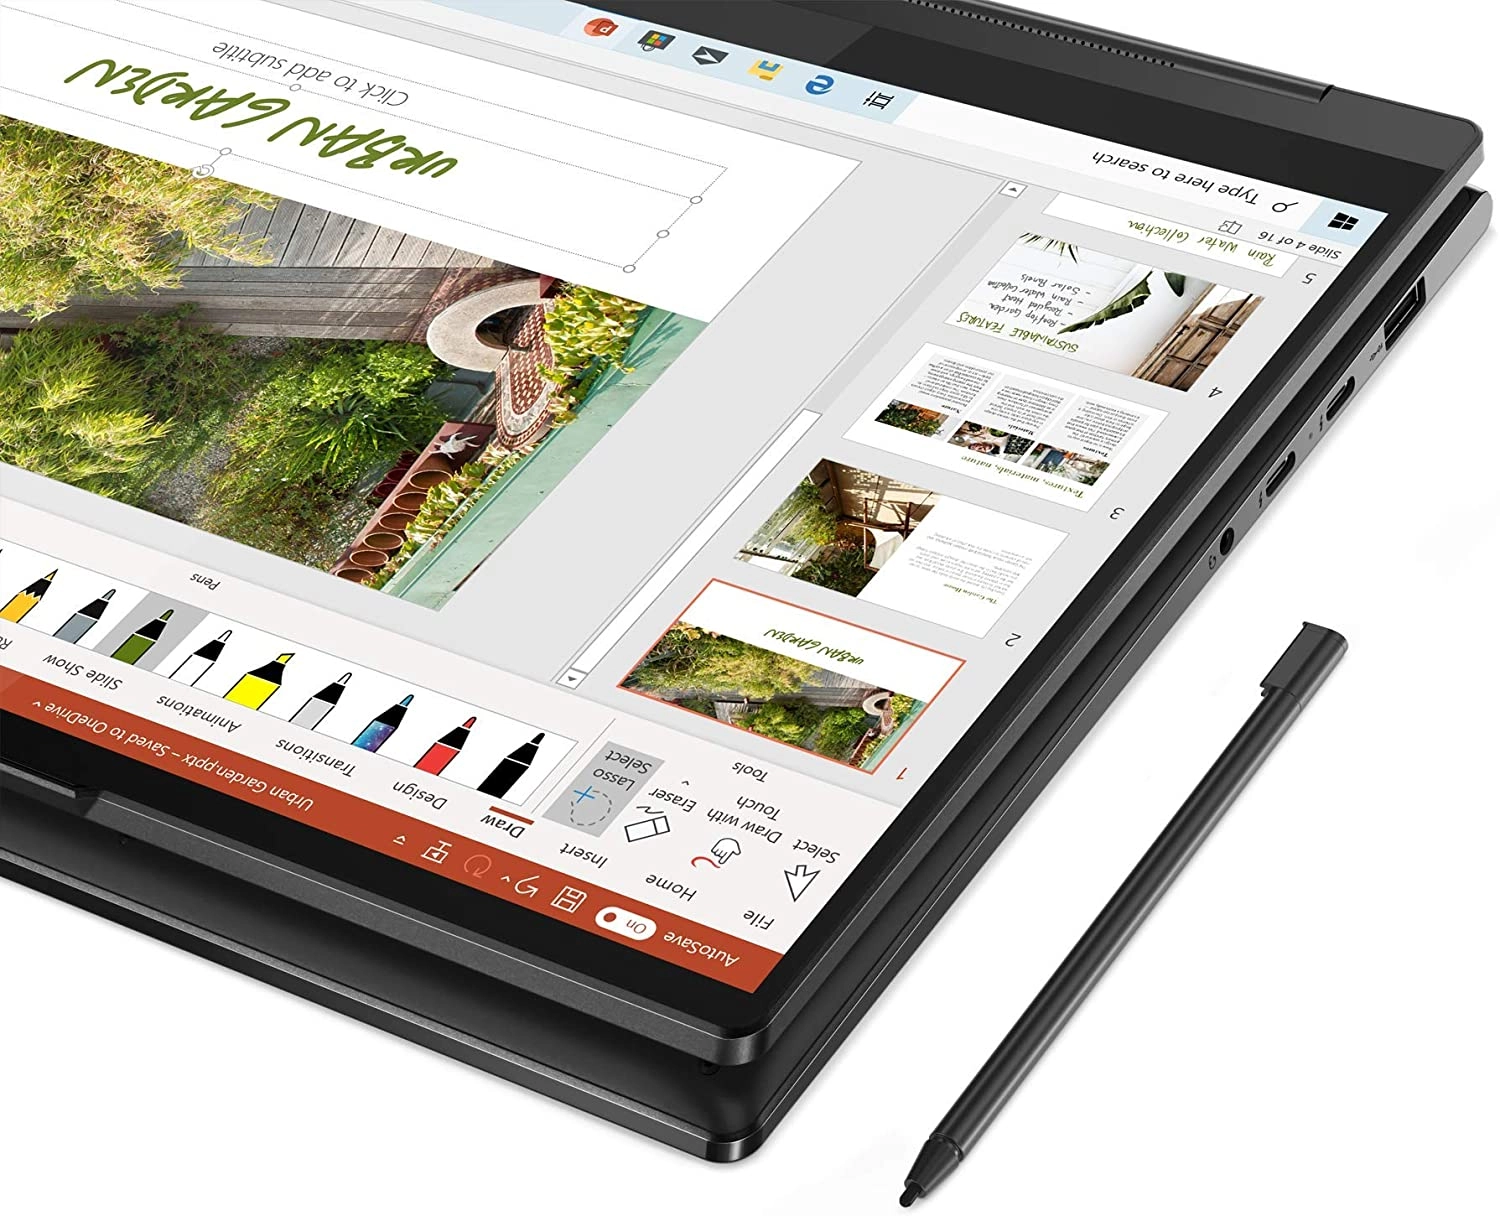 Lenovo Yoga 9 14ITL5 laptop image